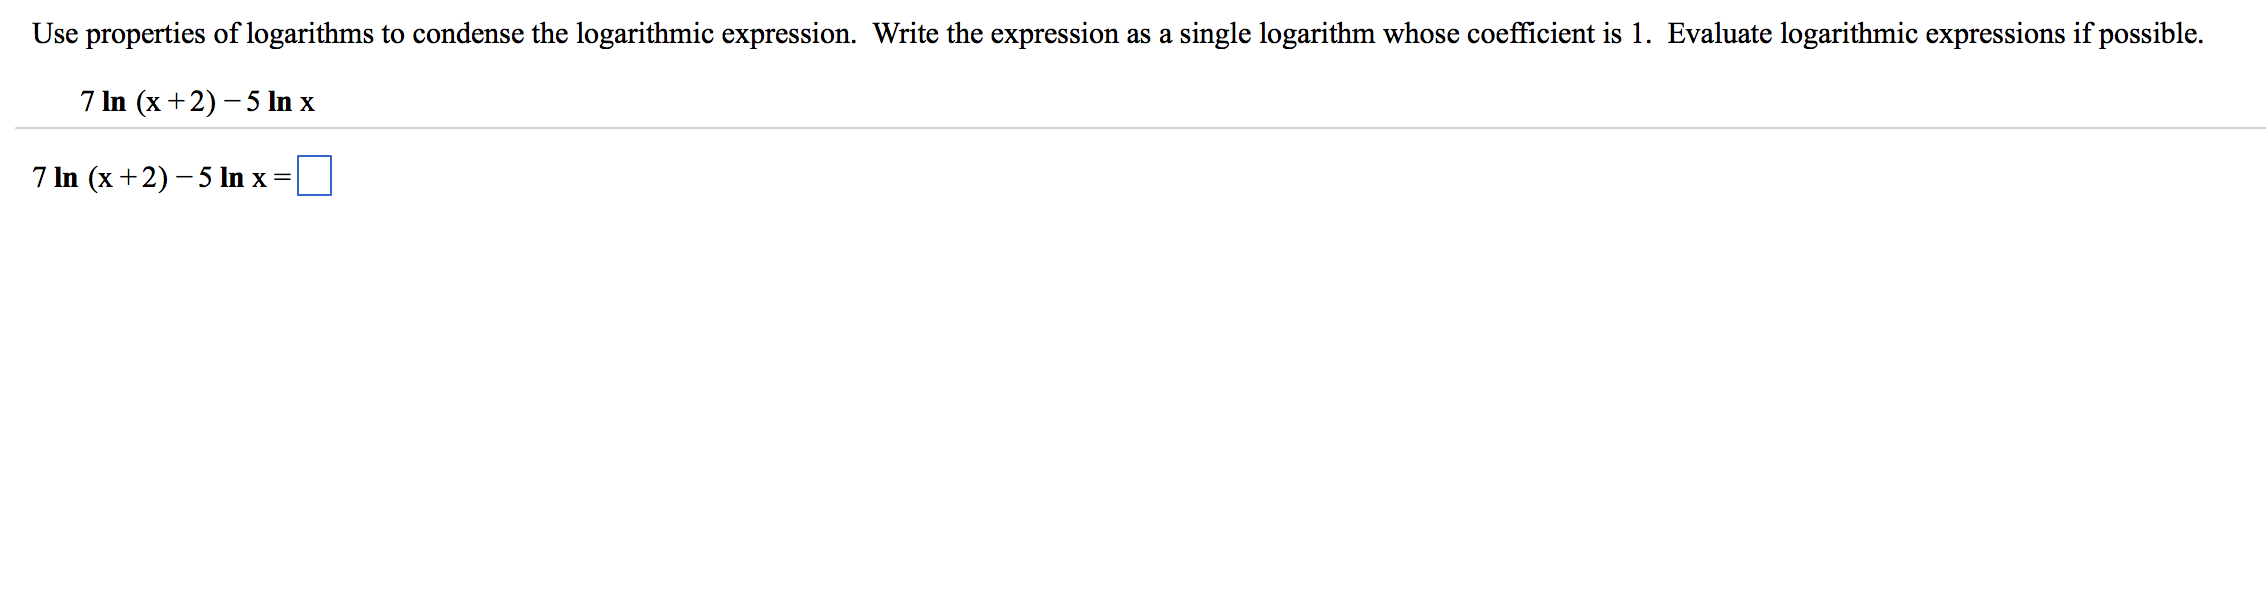 condense logarithms expression